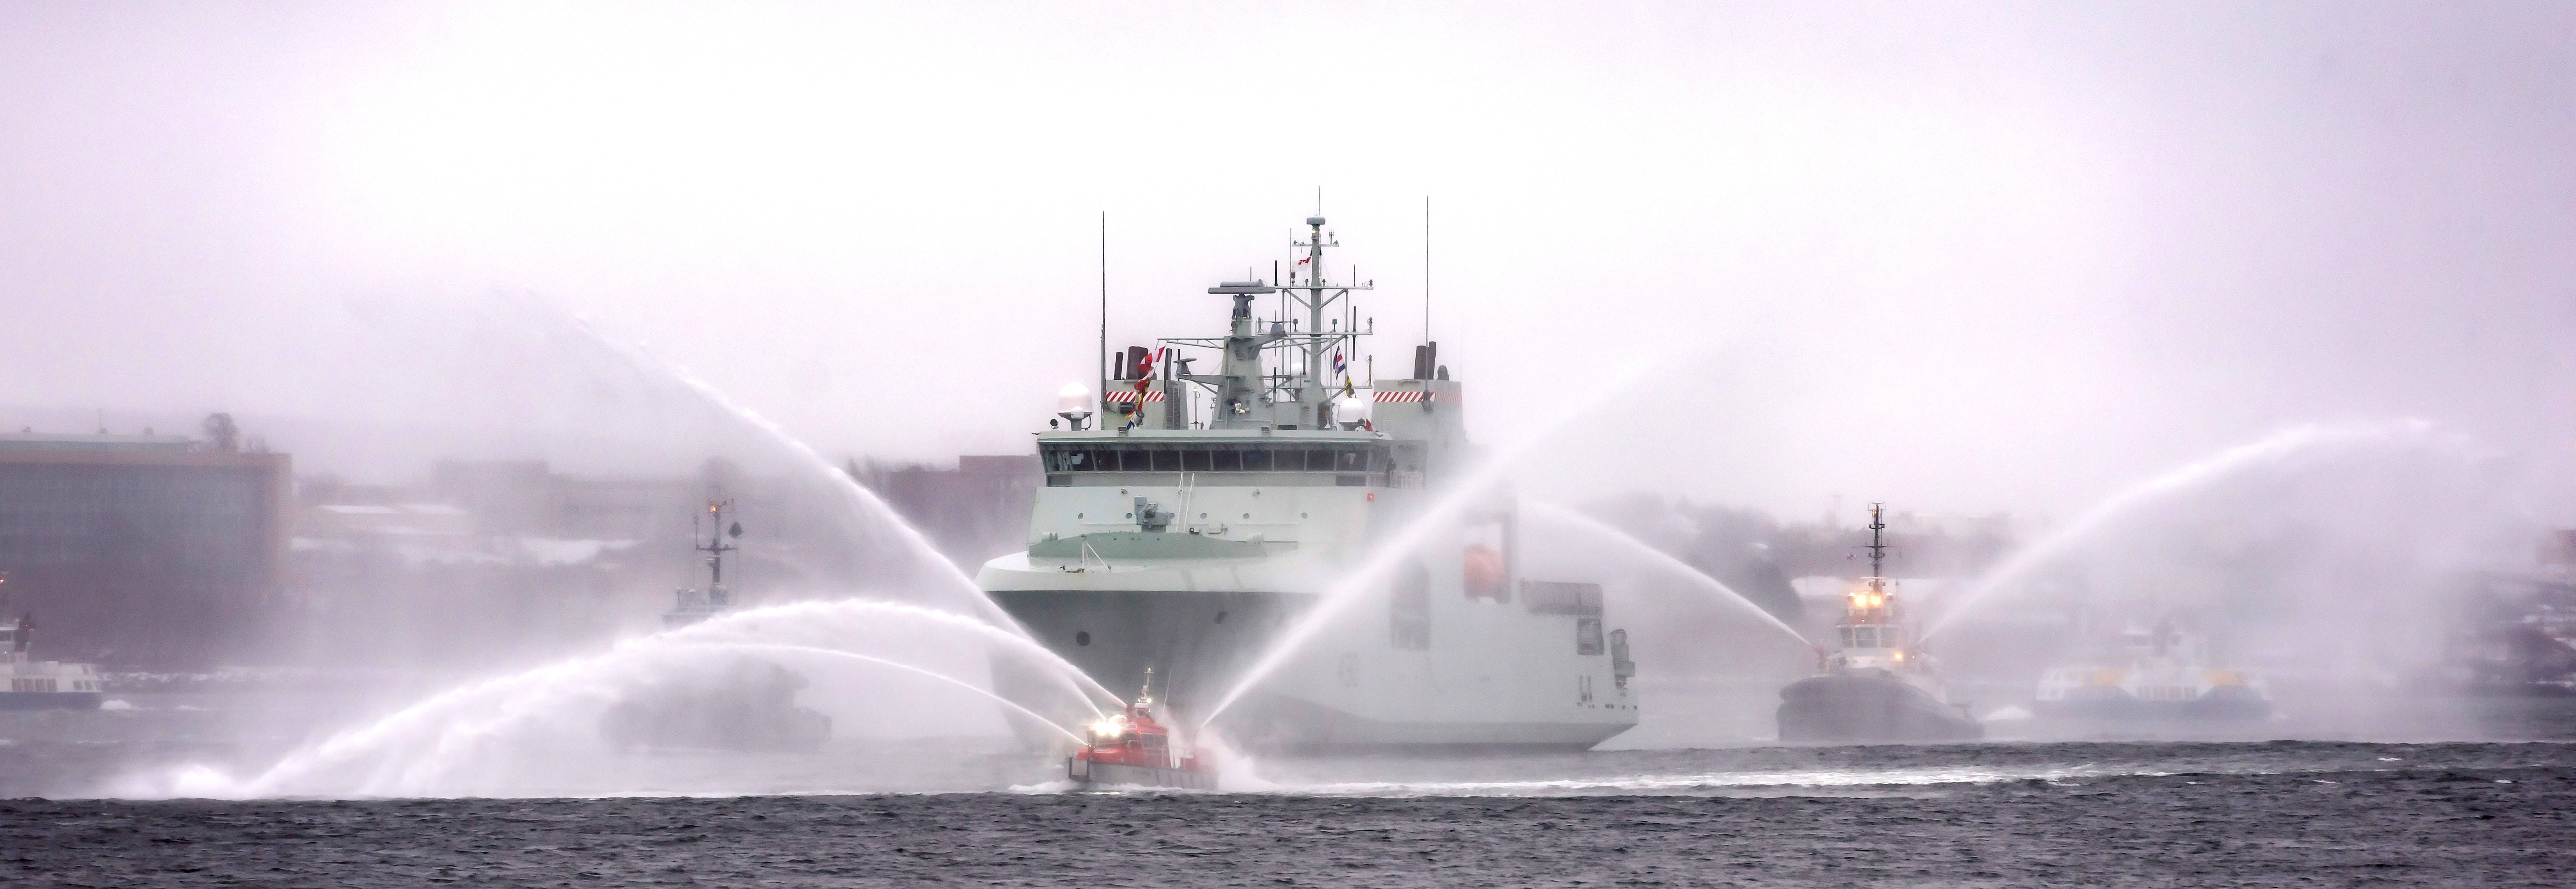 HMCS Harry DeWolf arrives in Halifax Harbour on December 16